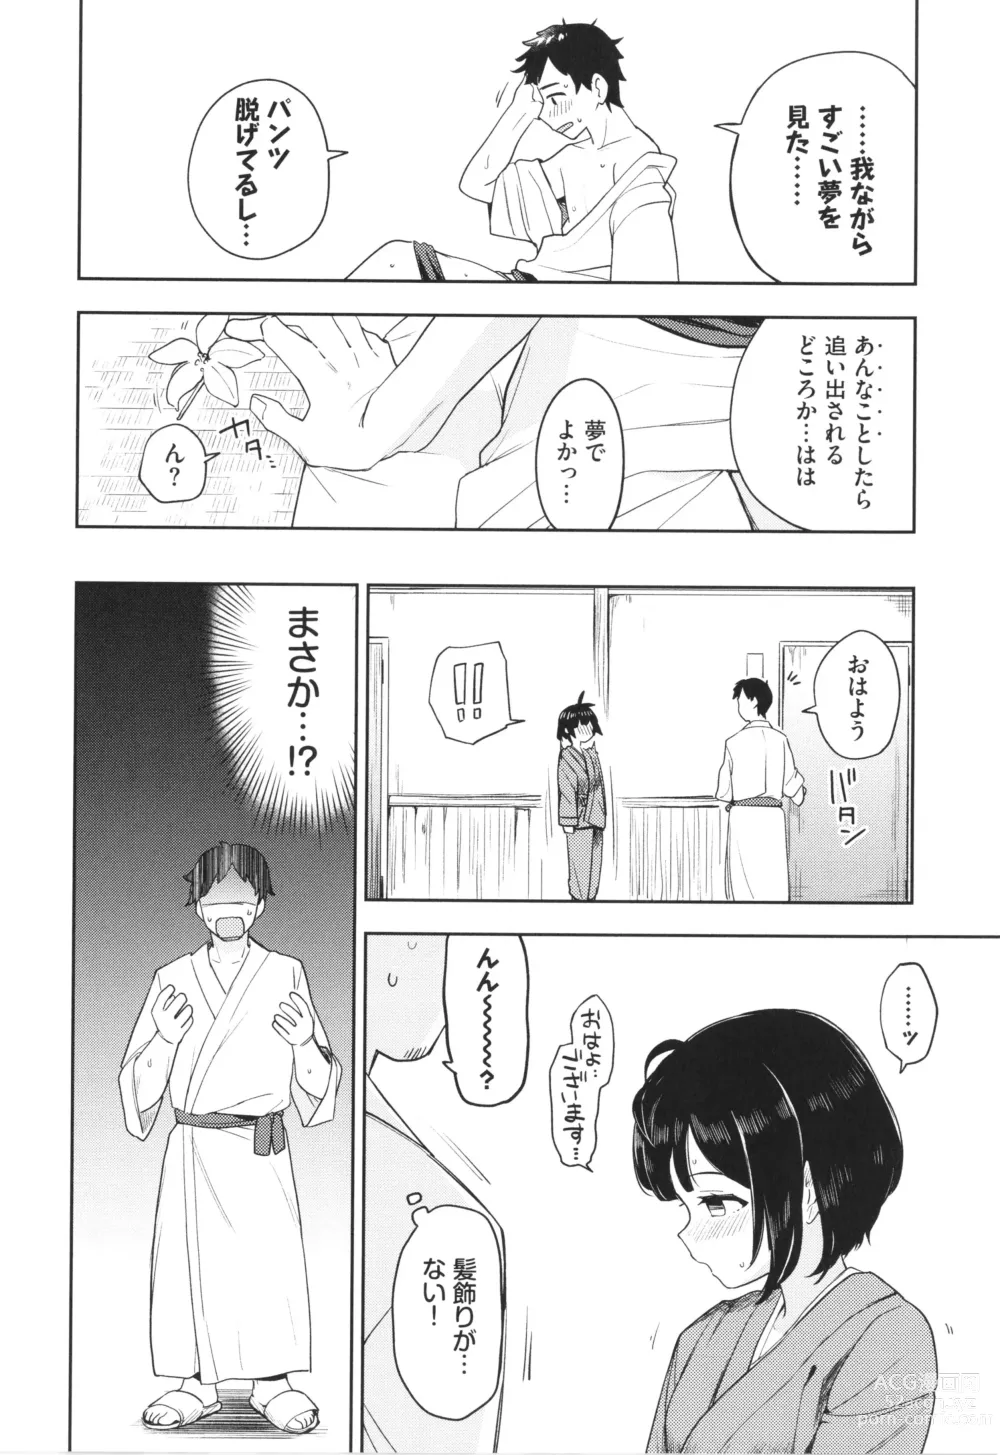 Page 11 of manga Secret Time